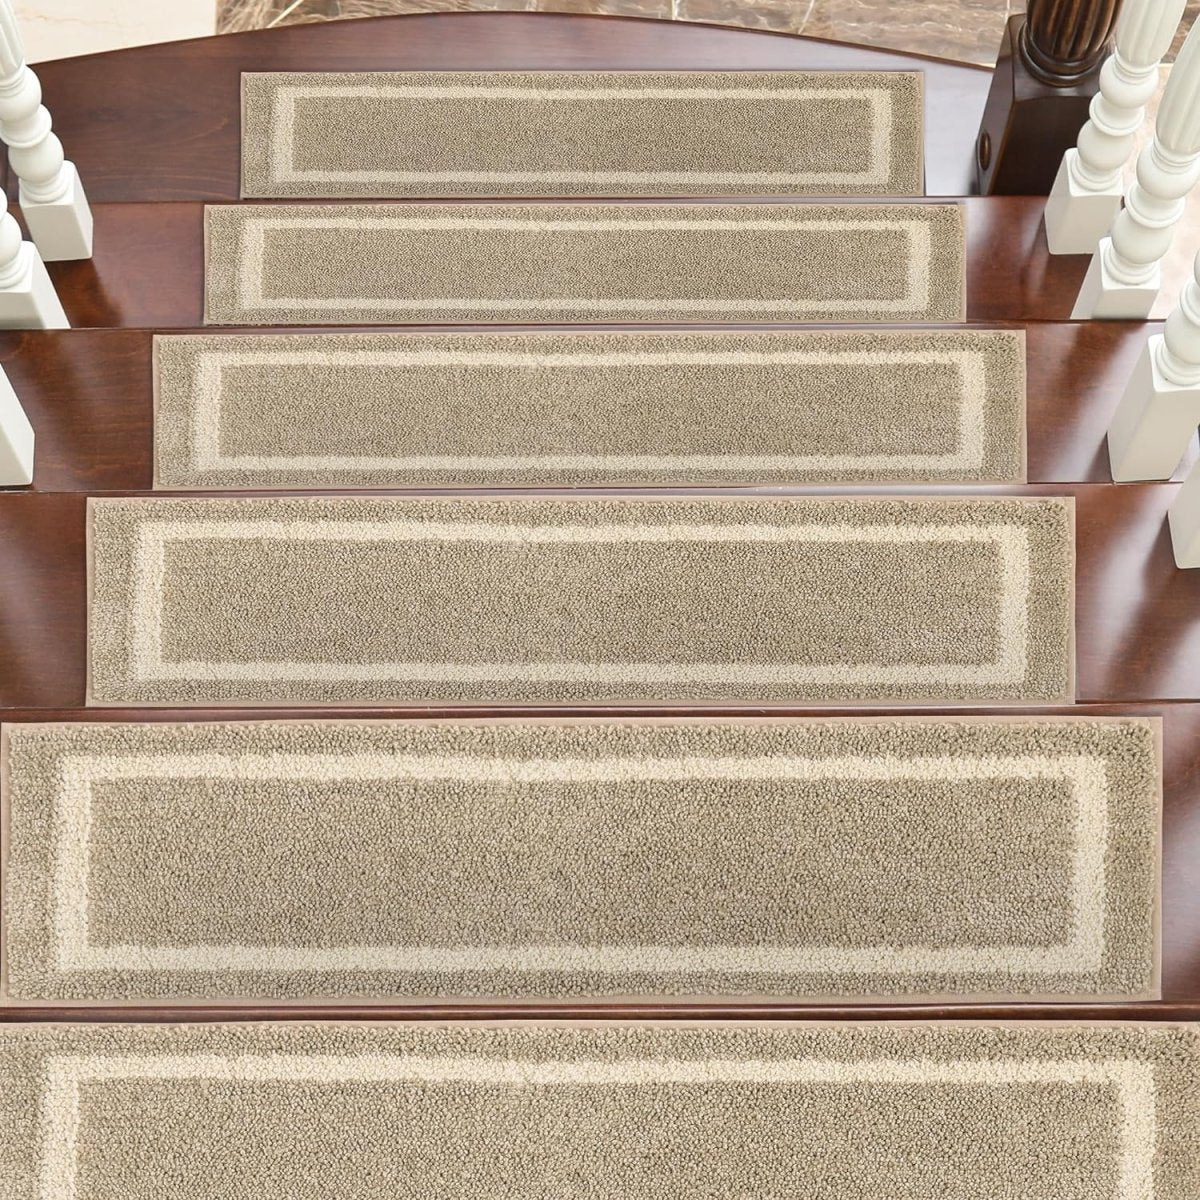 Premium Non-Slip Stair Carpet Treads - 22 X 70cm, Ideal for Kids, Elders, and Pets - Machine Washable - Slips Away - B0CSDDV2G2 -